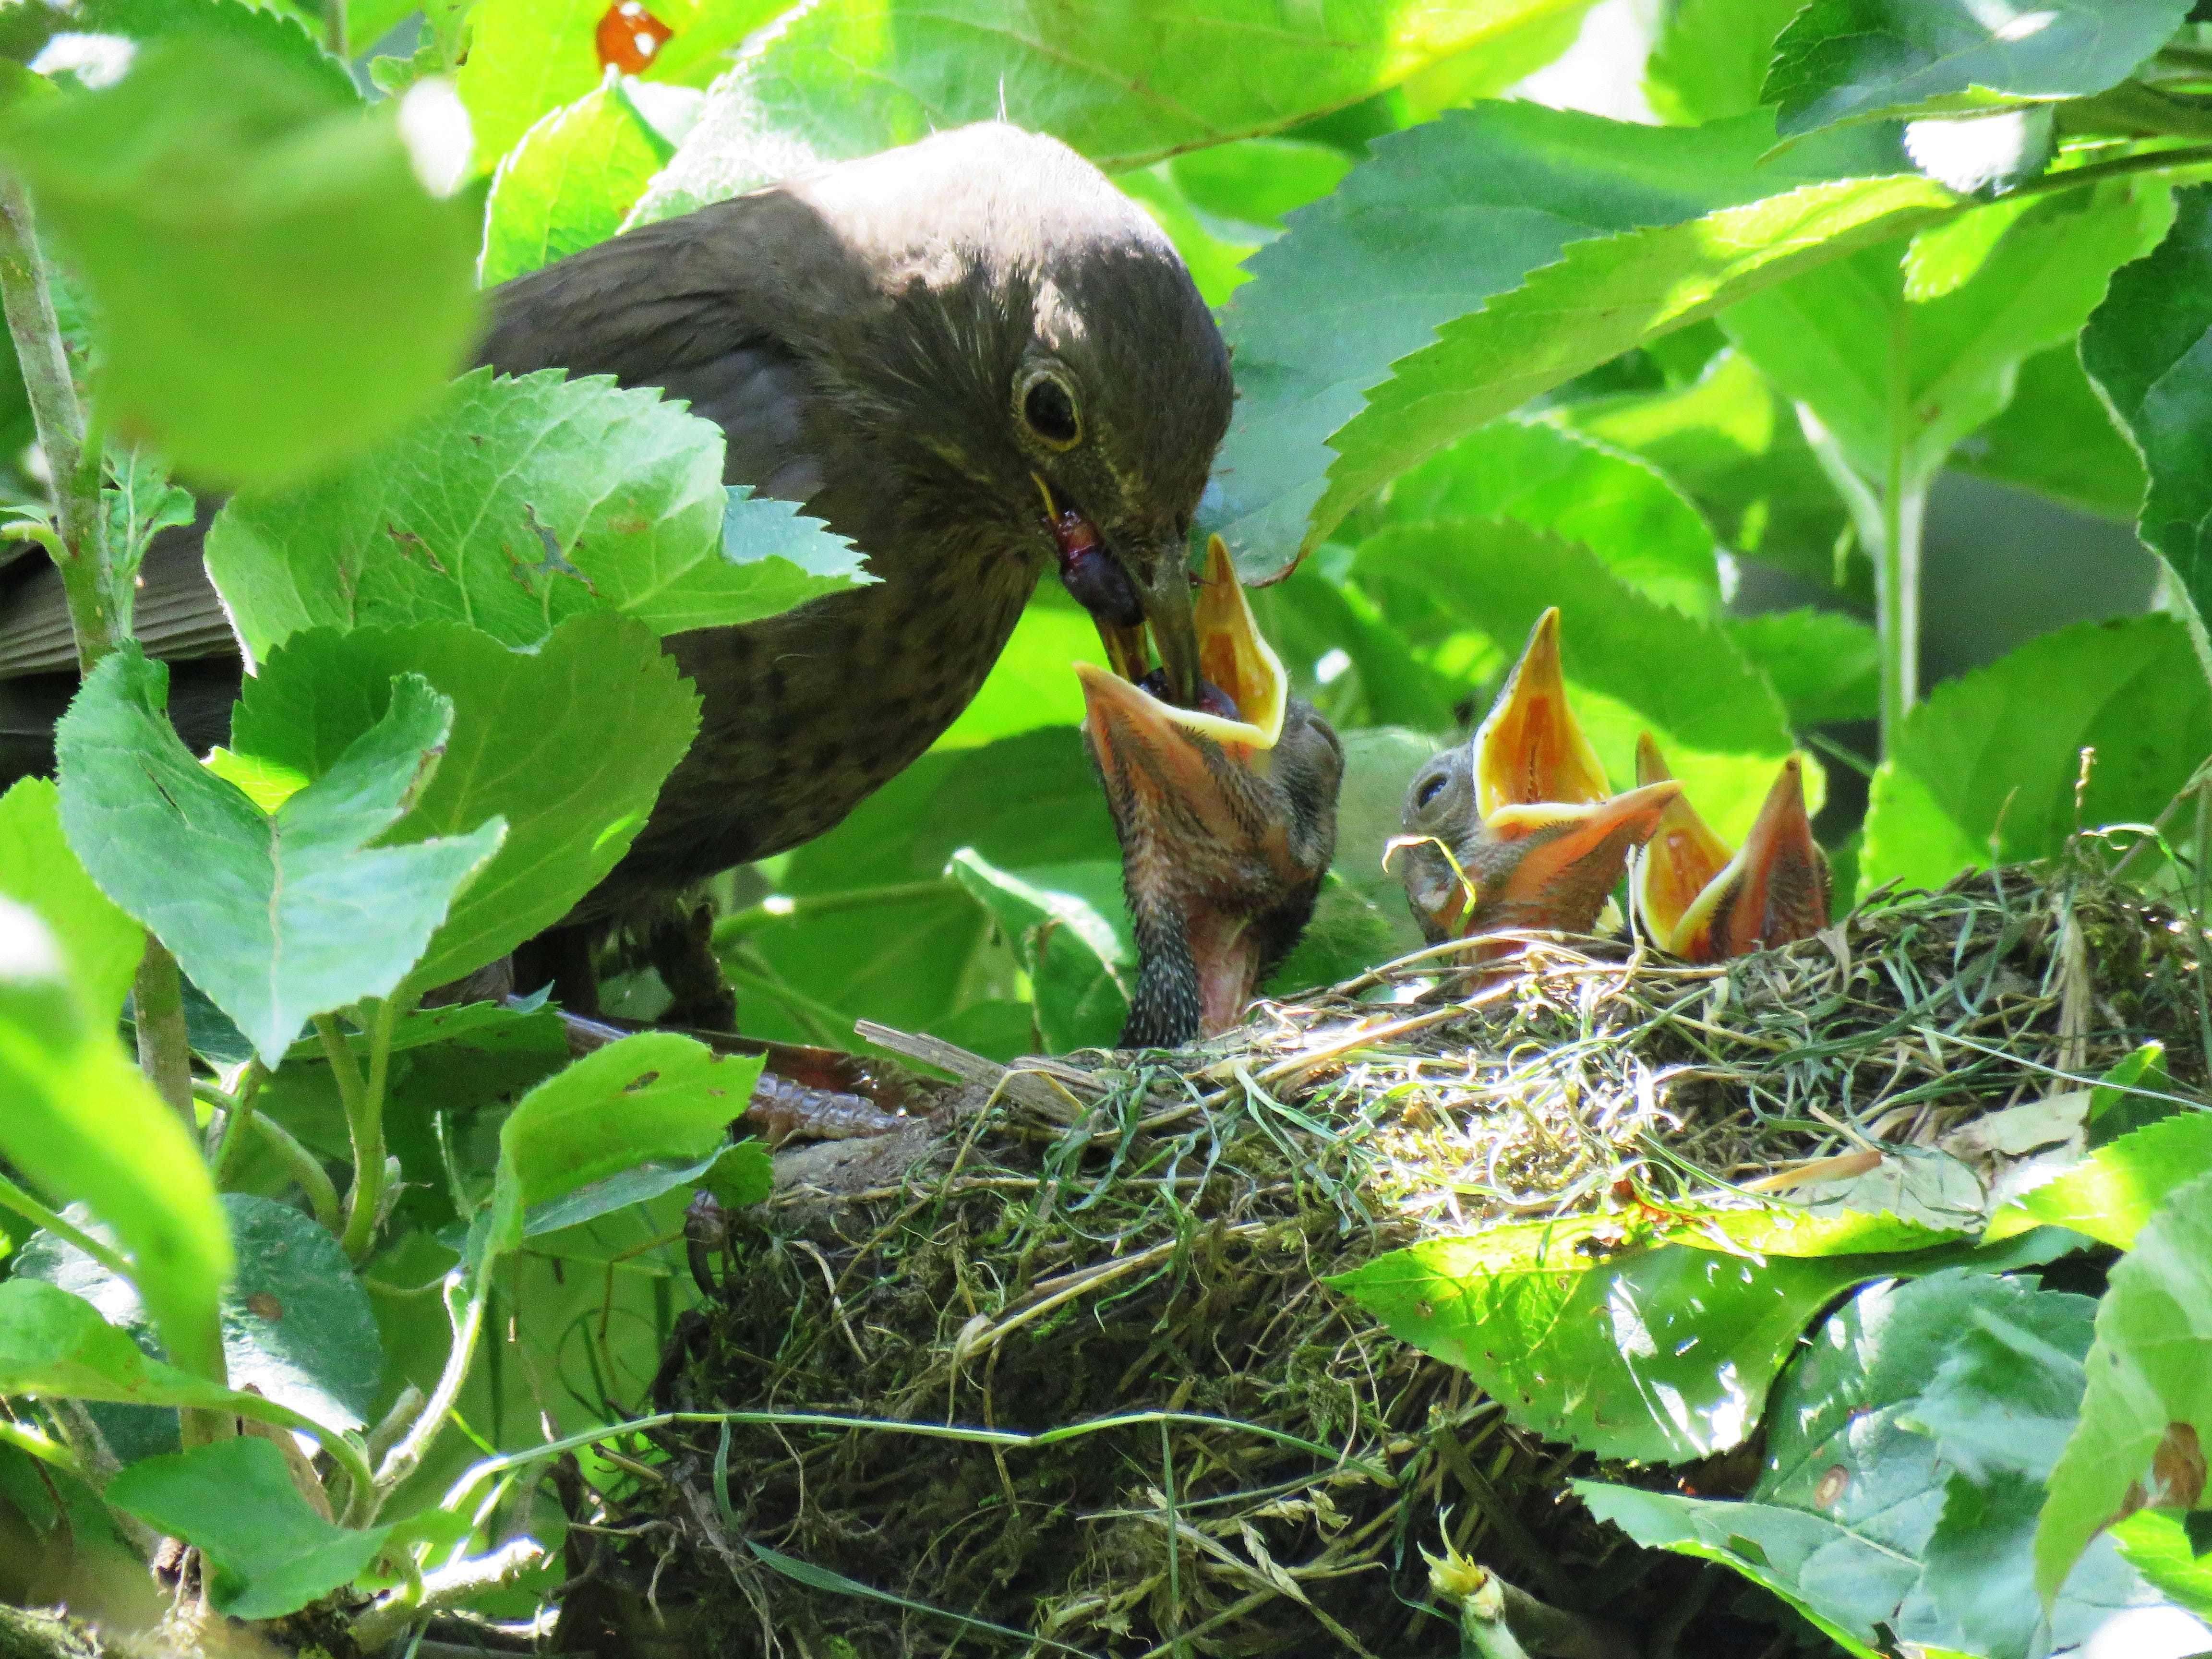 gray bird feeding chicks on nest, Blackbird, Hungry, young birds